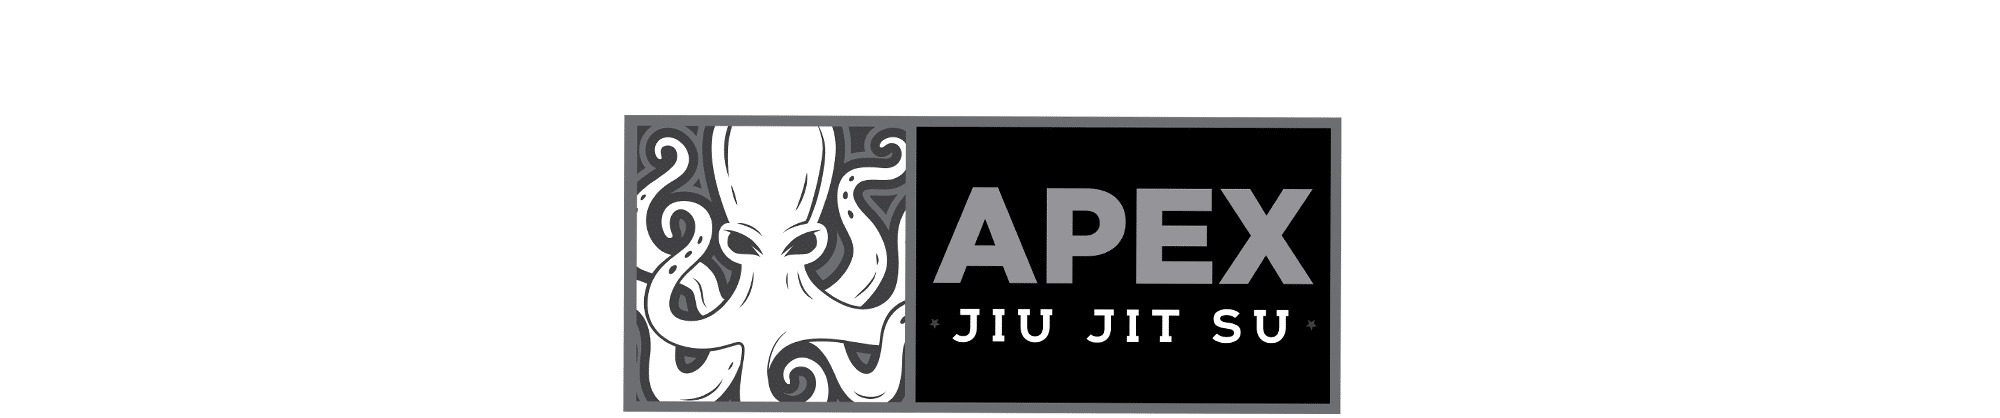 Apex Combat Academy New Offers